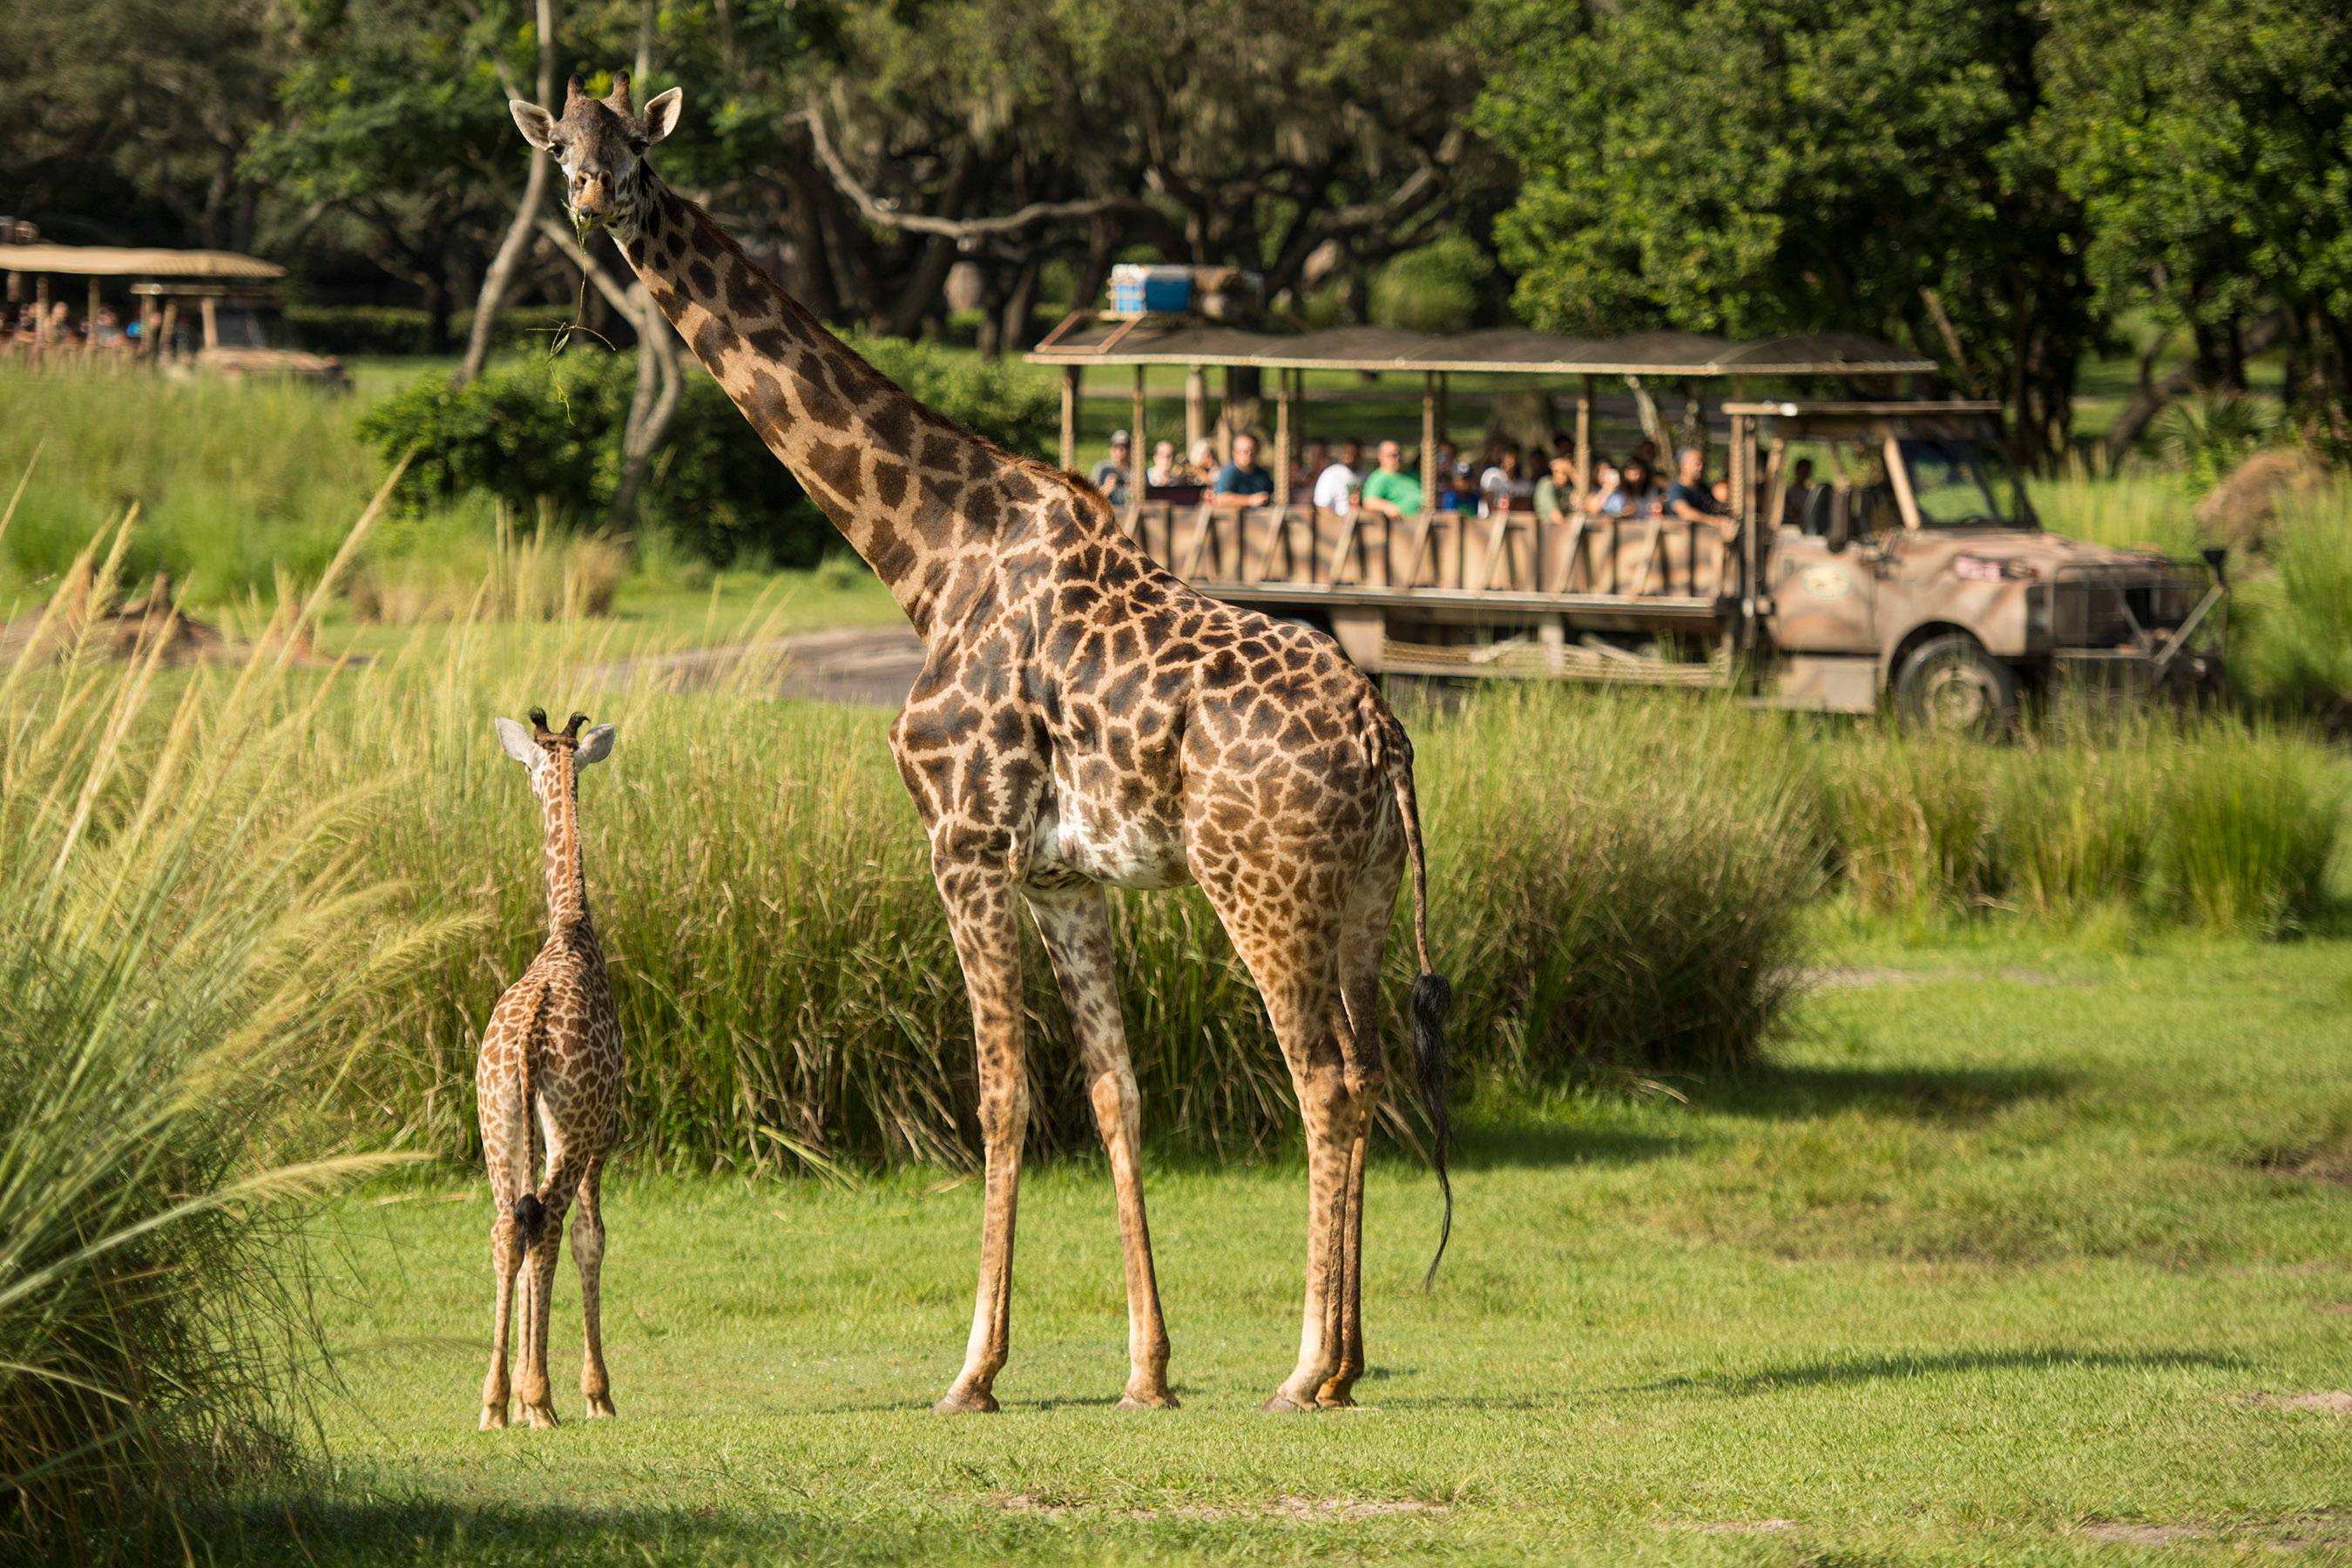 PHOTOS - Aella the 2-month-old Masai giraffe calf is now on the savanna at Disney's Animal Kingdom